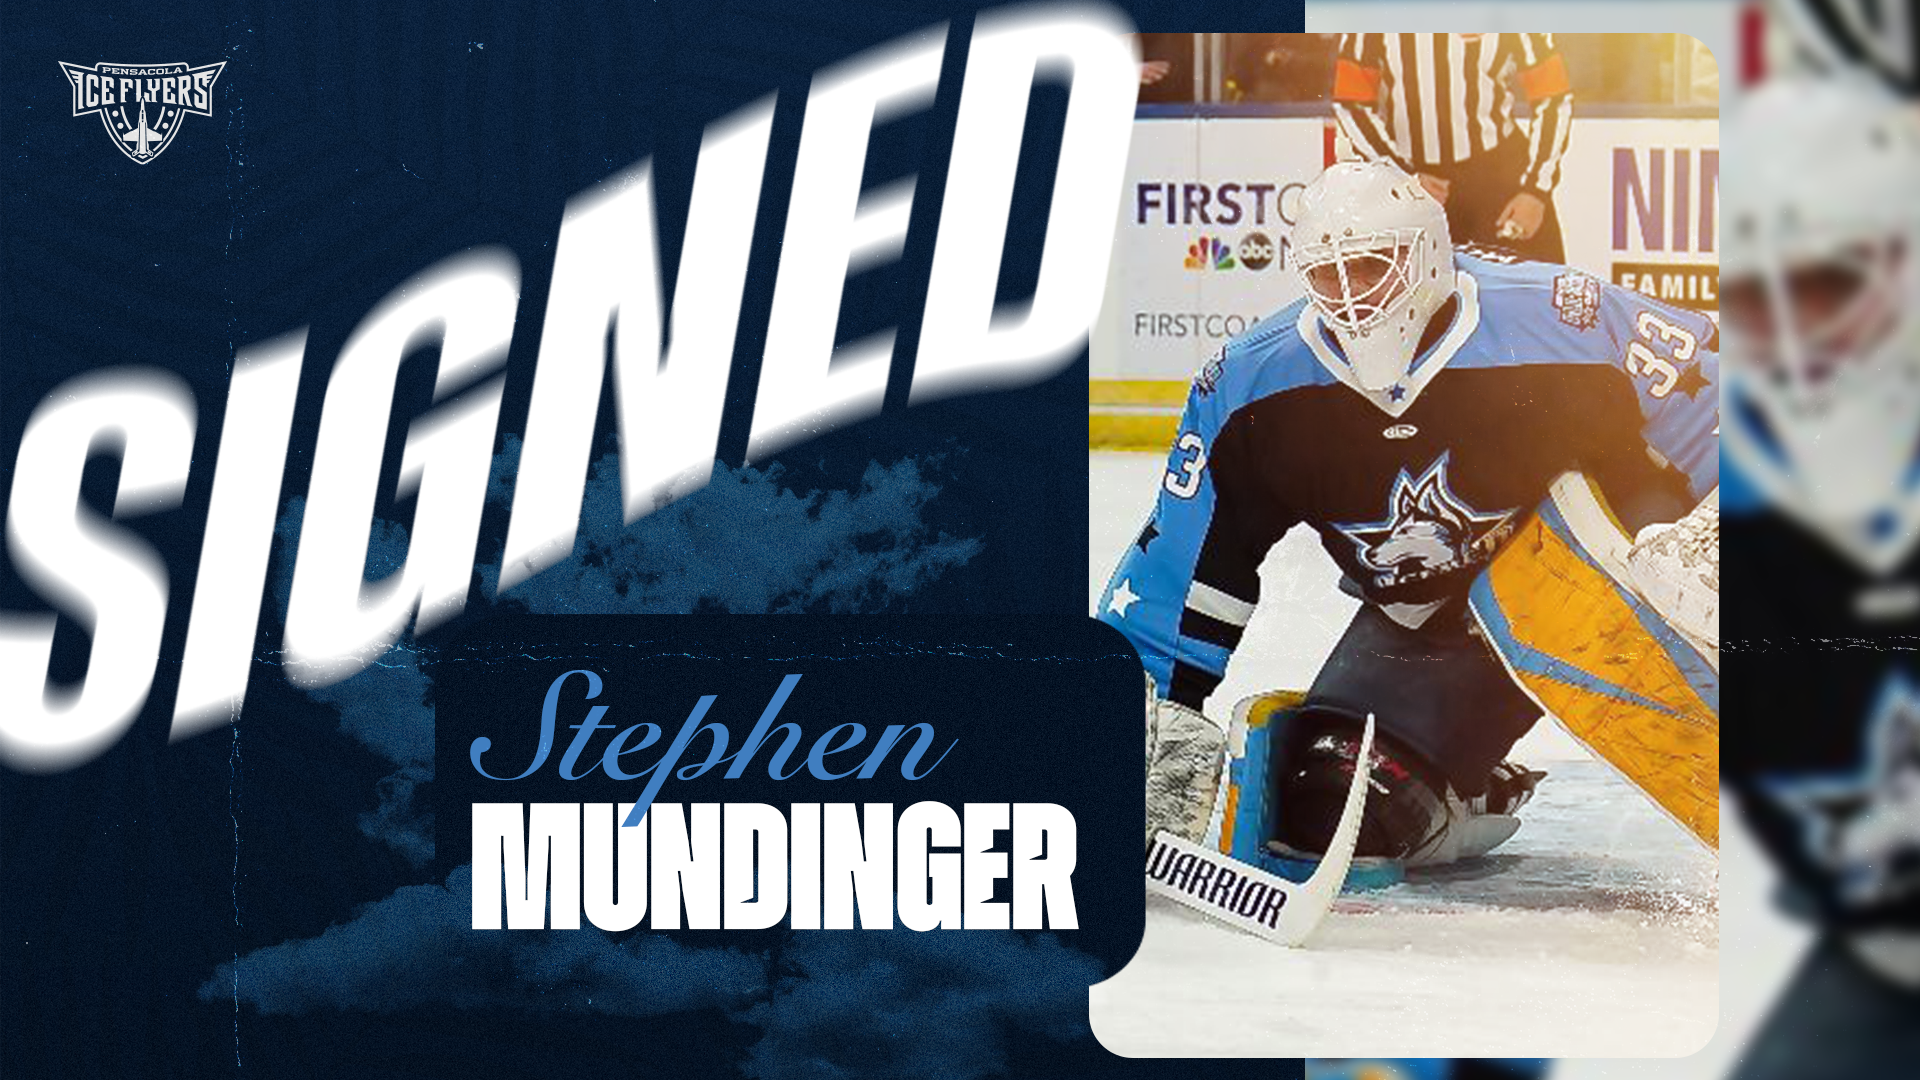 Ice Flyers Welcome Goalie Stephen Mundinger To The Hangar